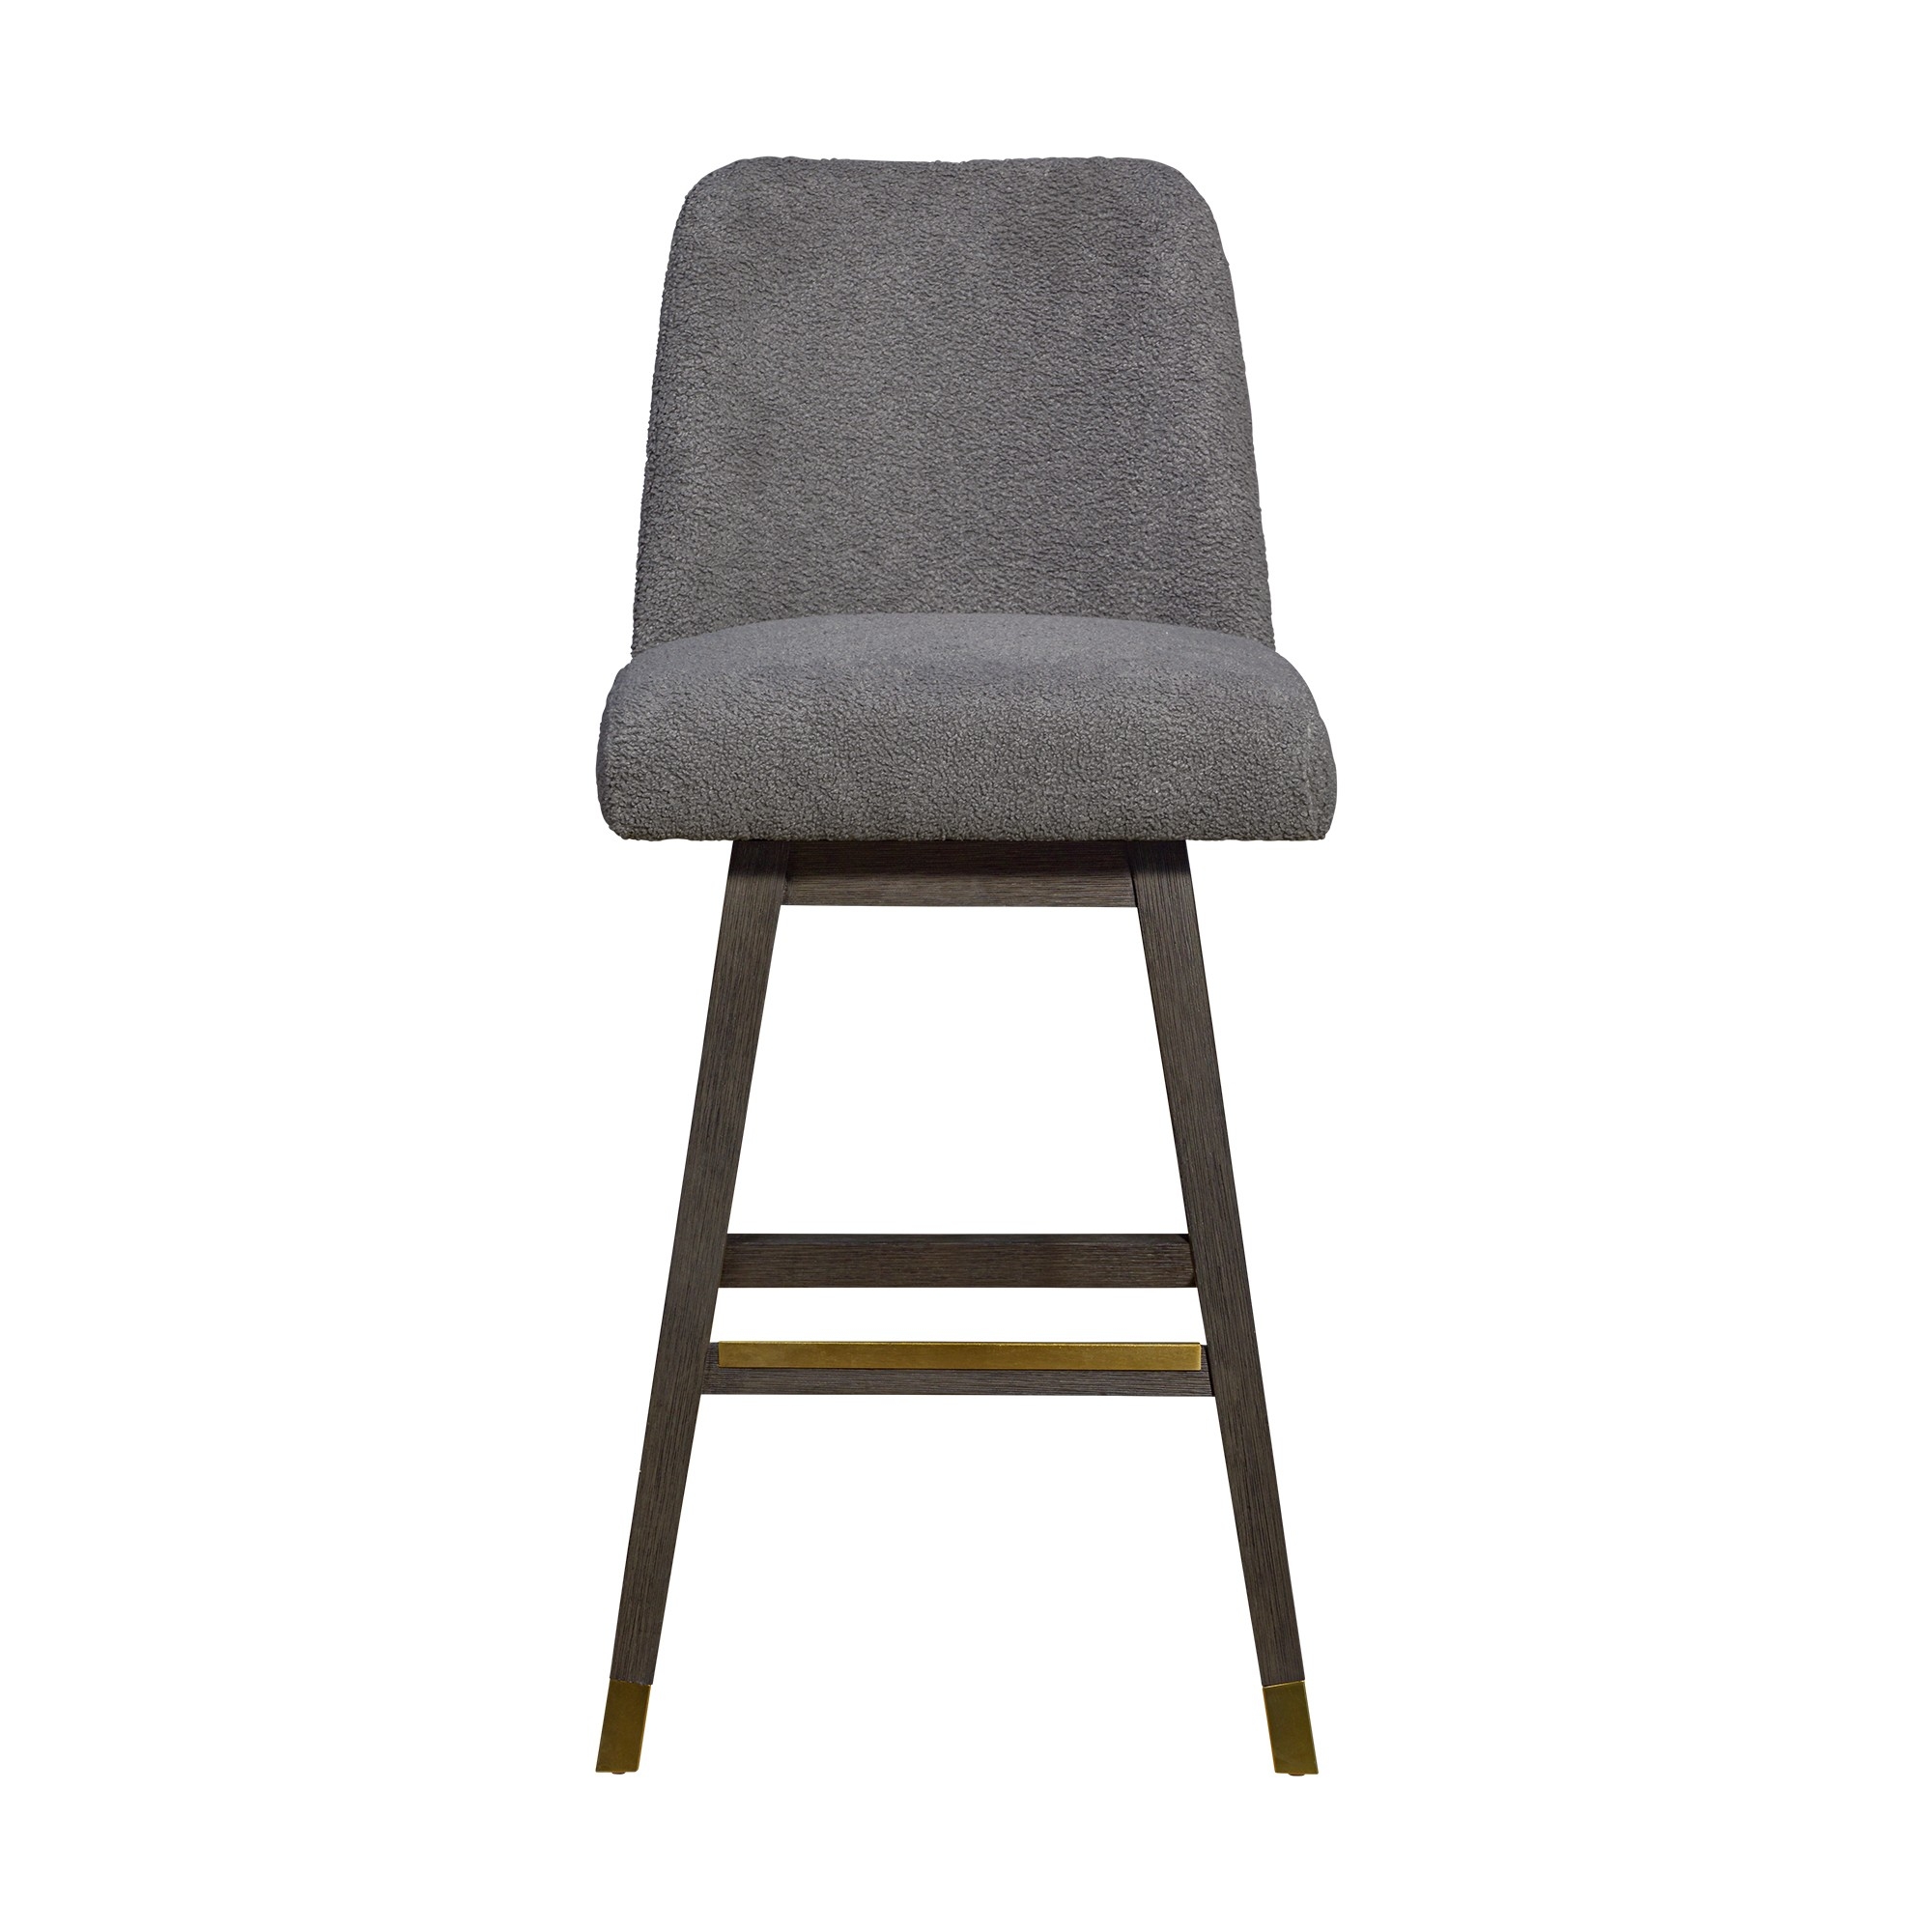 Lara 30 Inch Swivel Barstool Chair, Soft Gray Boucle Fabric, Wood Legs- Saltoro Sherpi